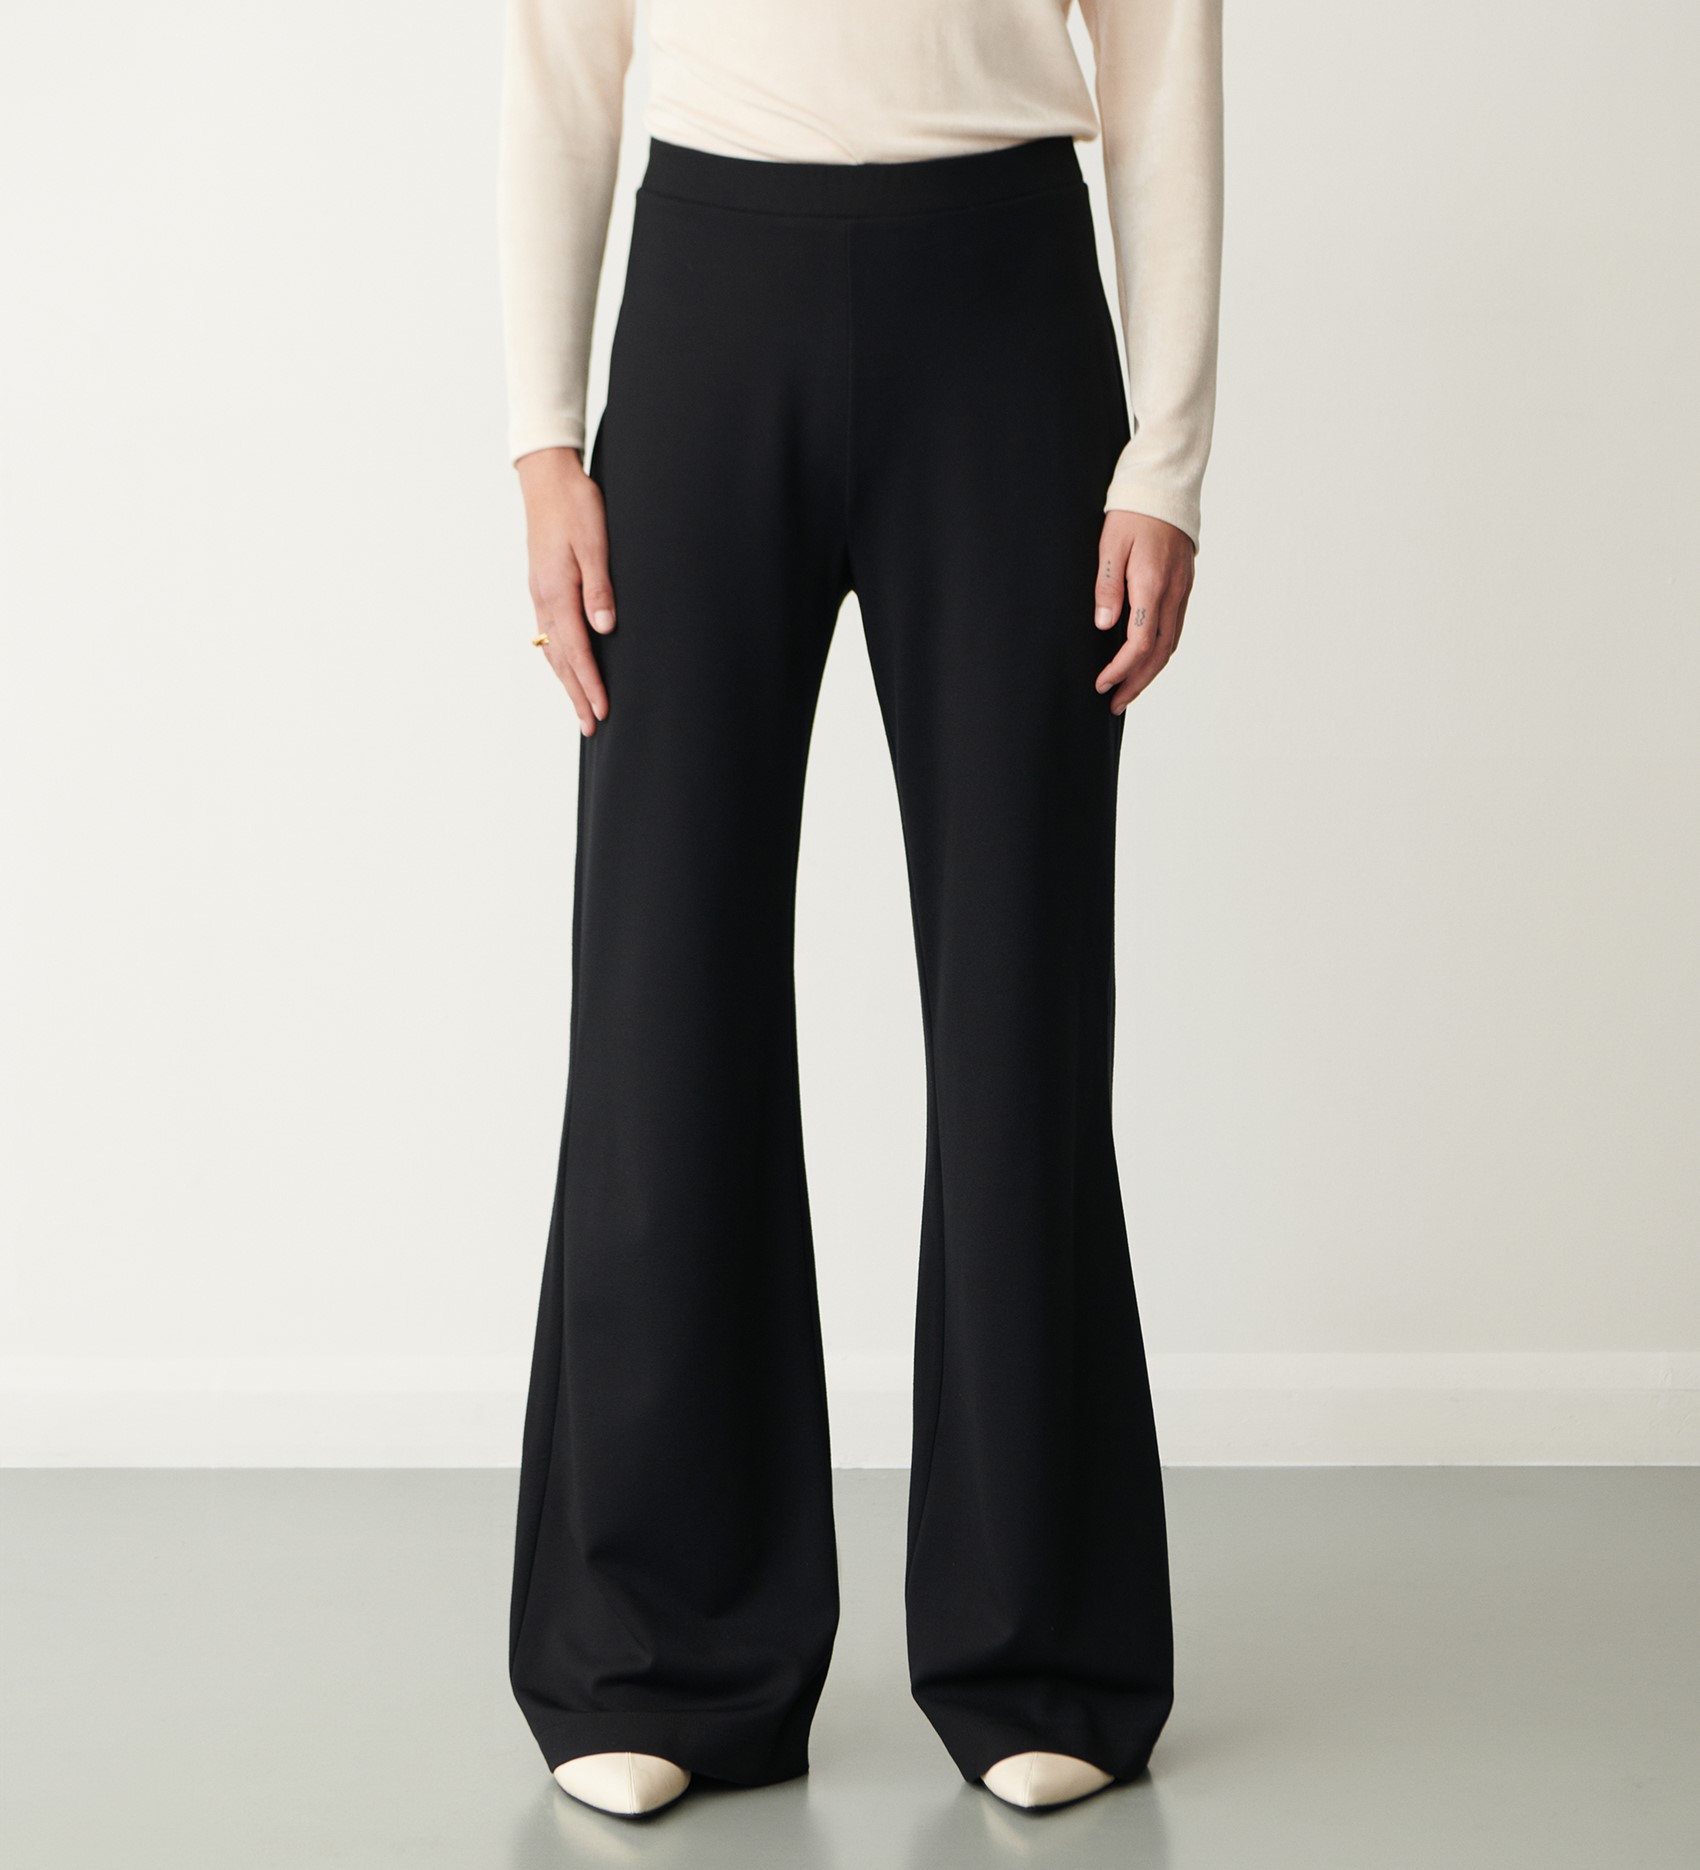 Reyna Black Ponte Jersey Trouser | Finery London